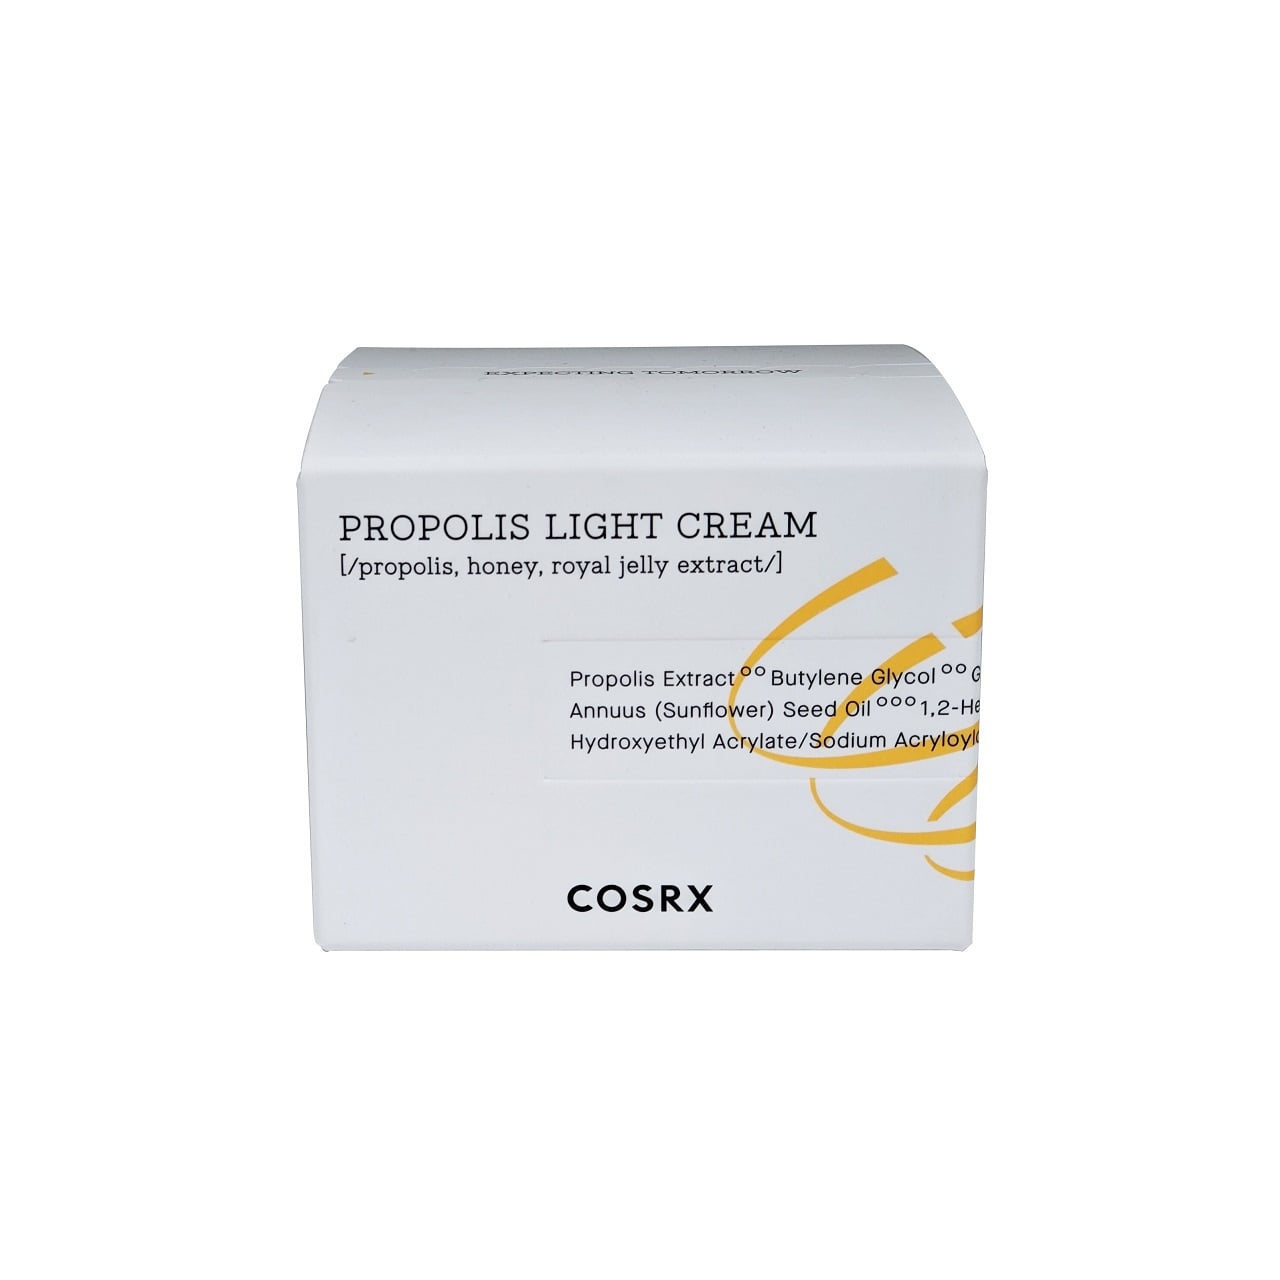 Product label for COSRX Full Fit Propolis Light Cream